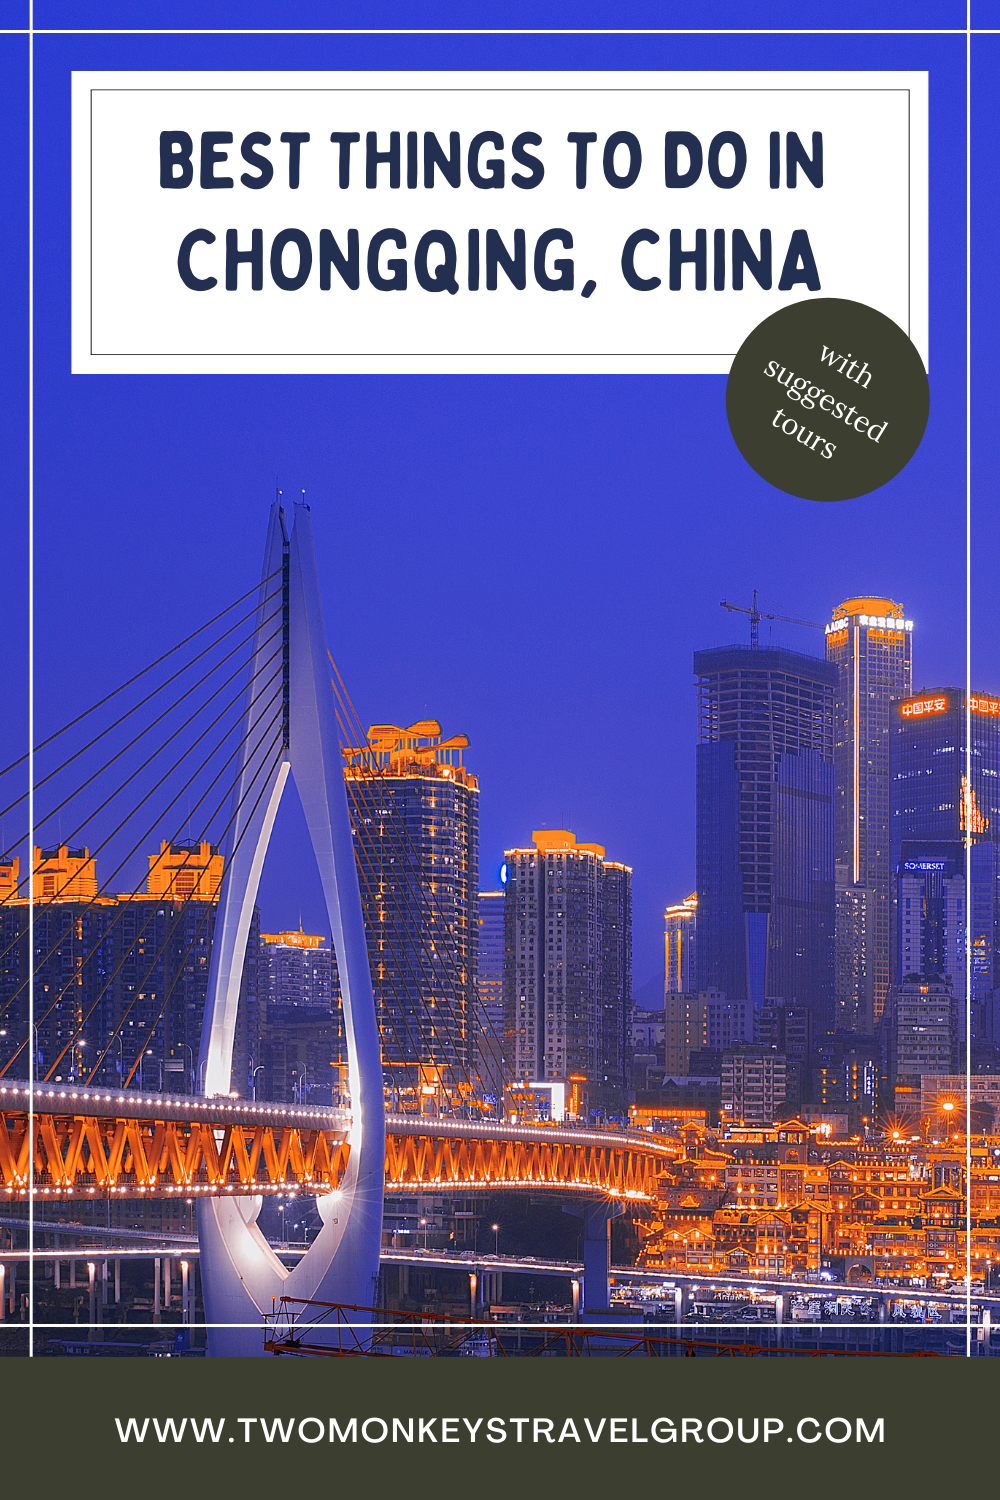 5 Best Things To Do in Chongqing China 1